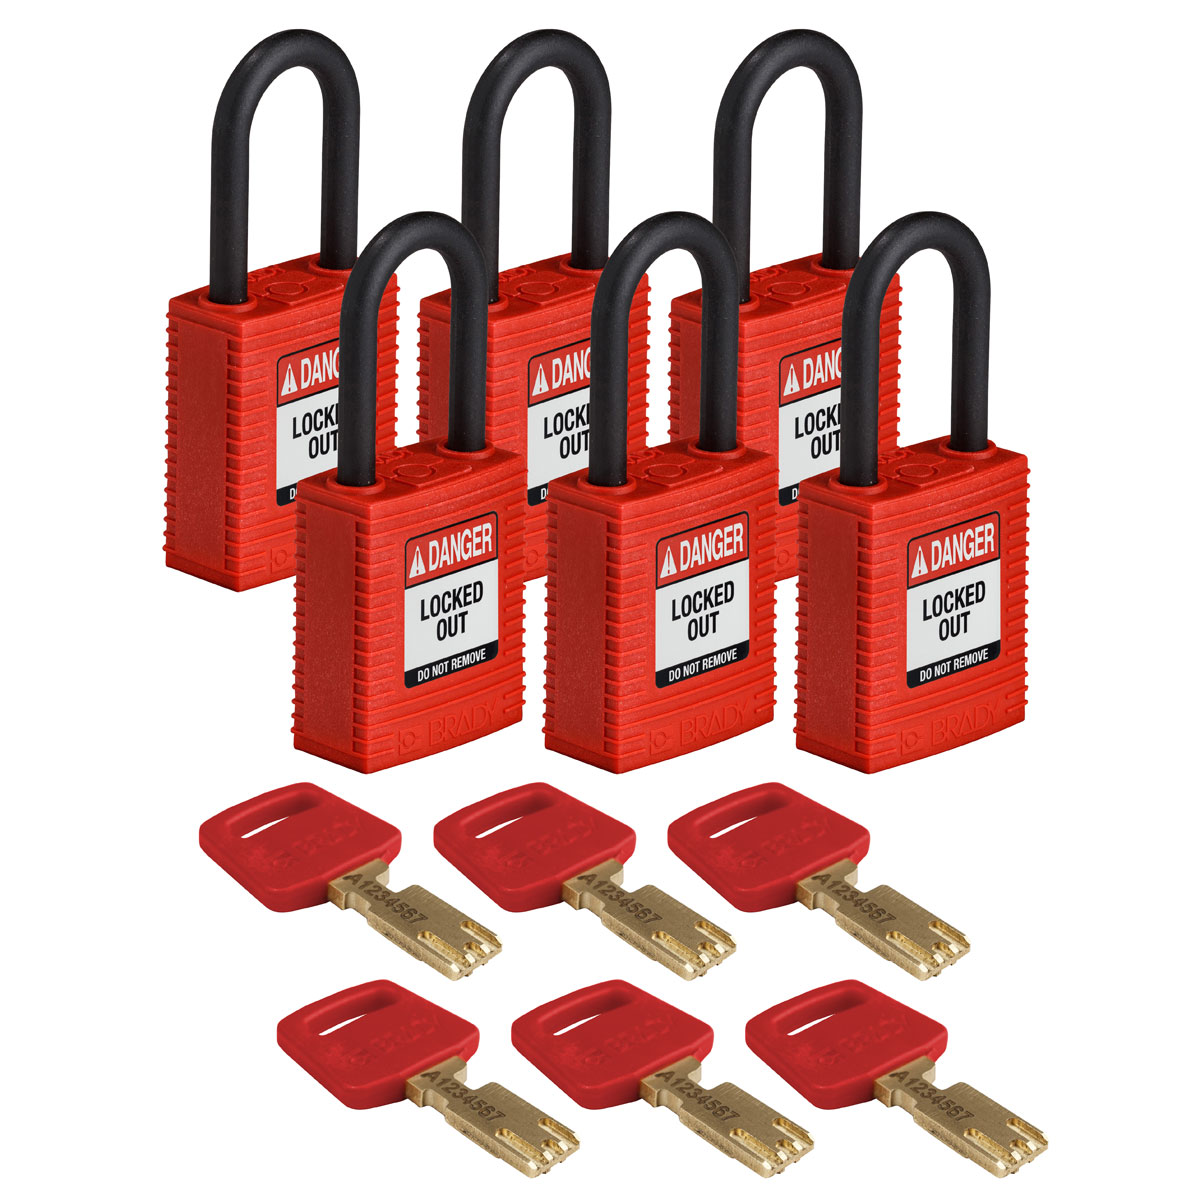 1H32 6 NEW BRADY Y489349 105890 70-40 KAX6 RED SAFETY LOCKS WITH KEYS 